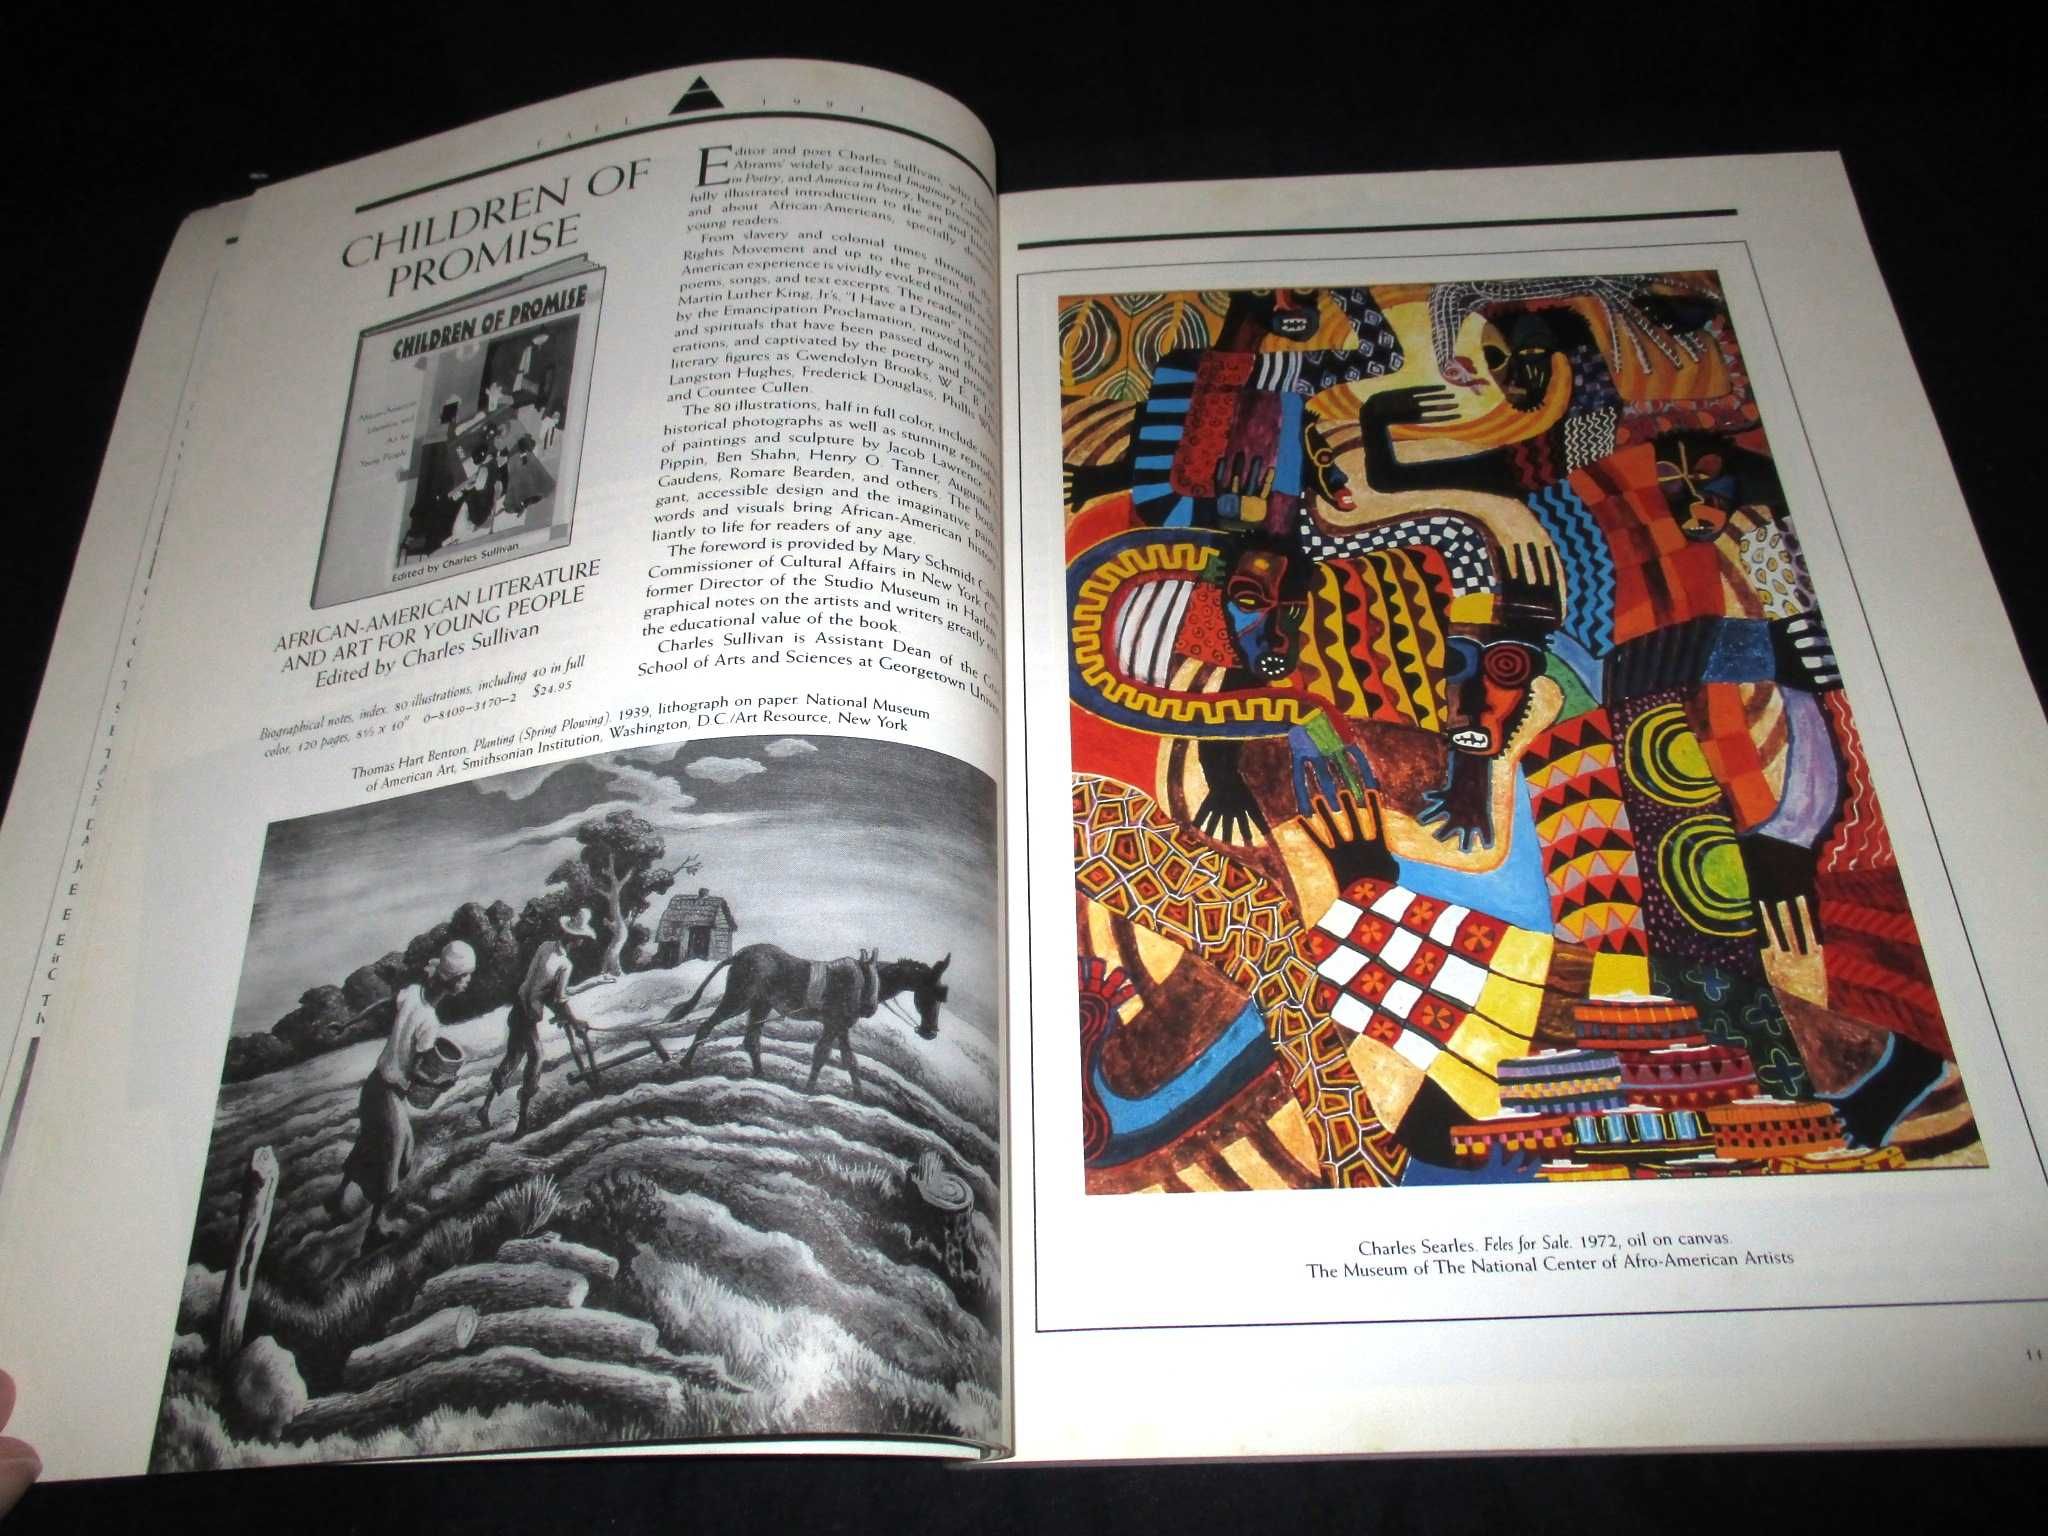 Livro Abrams Art Books 1991 a 1992